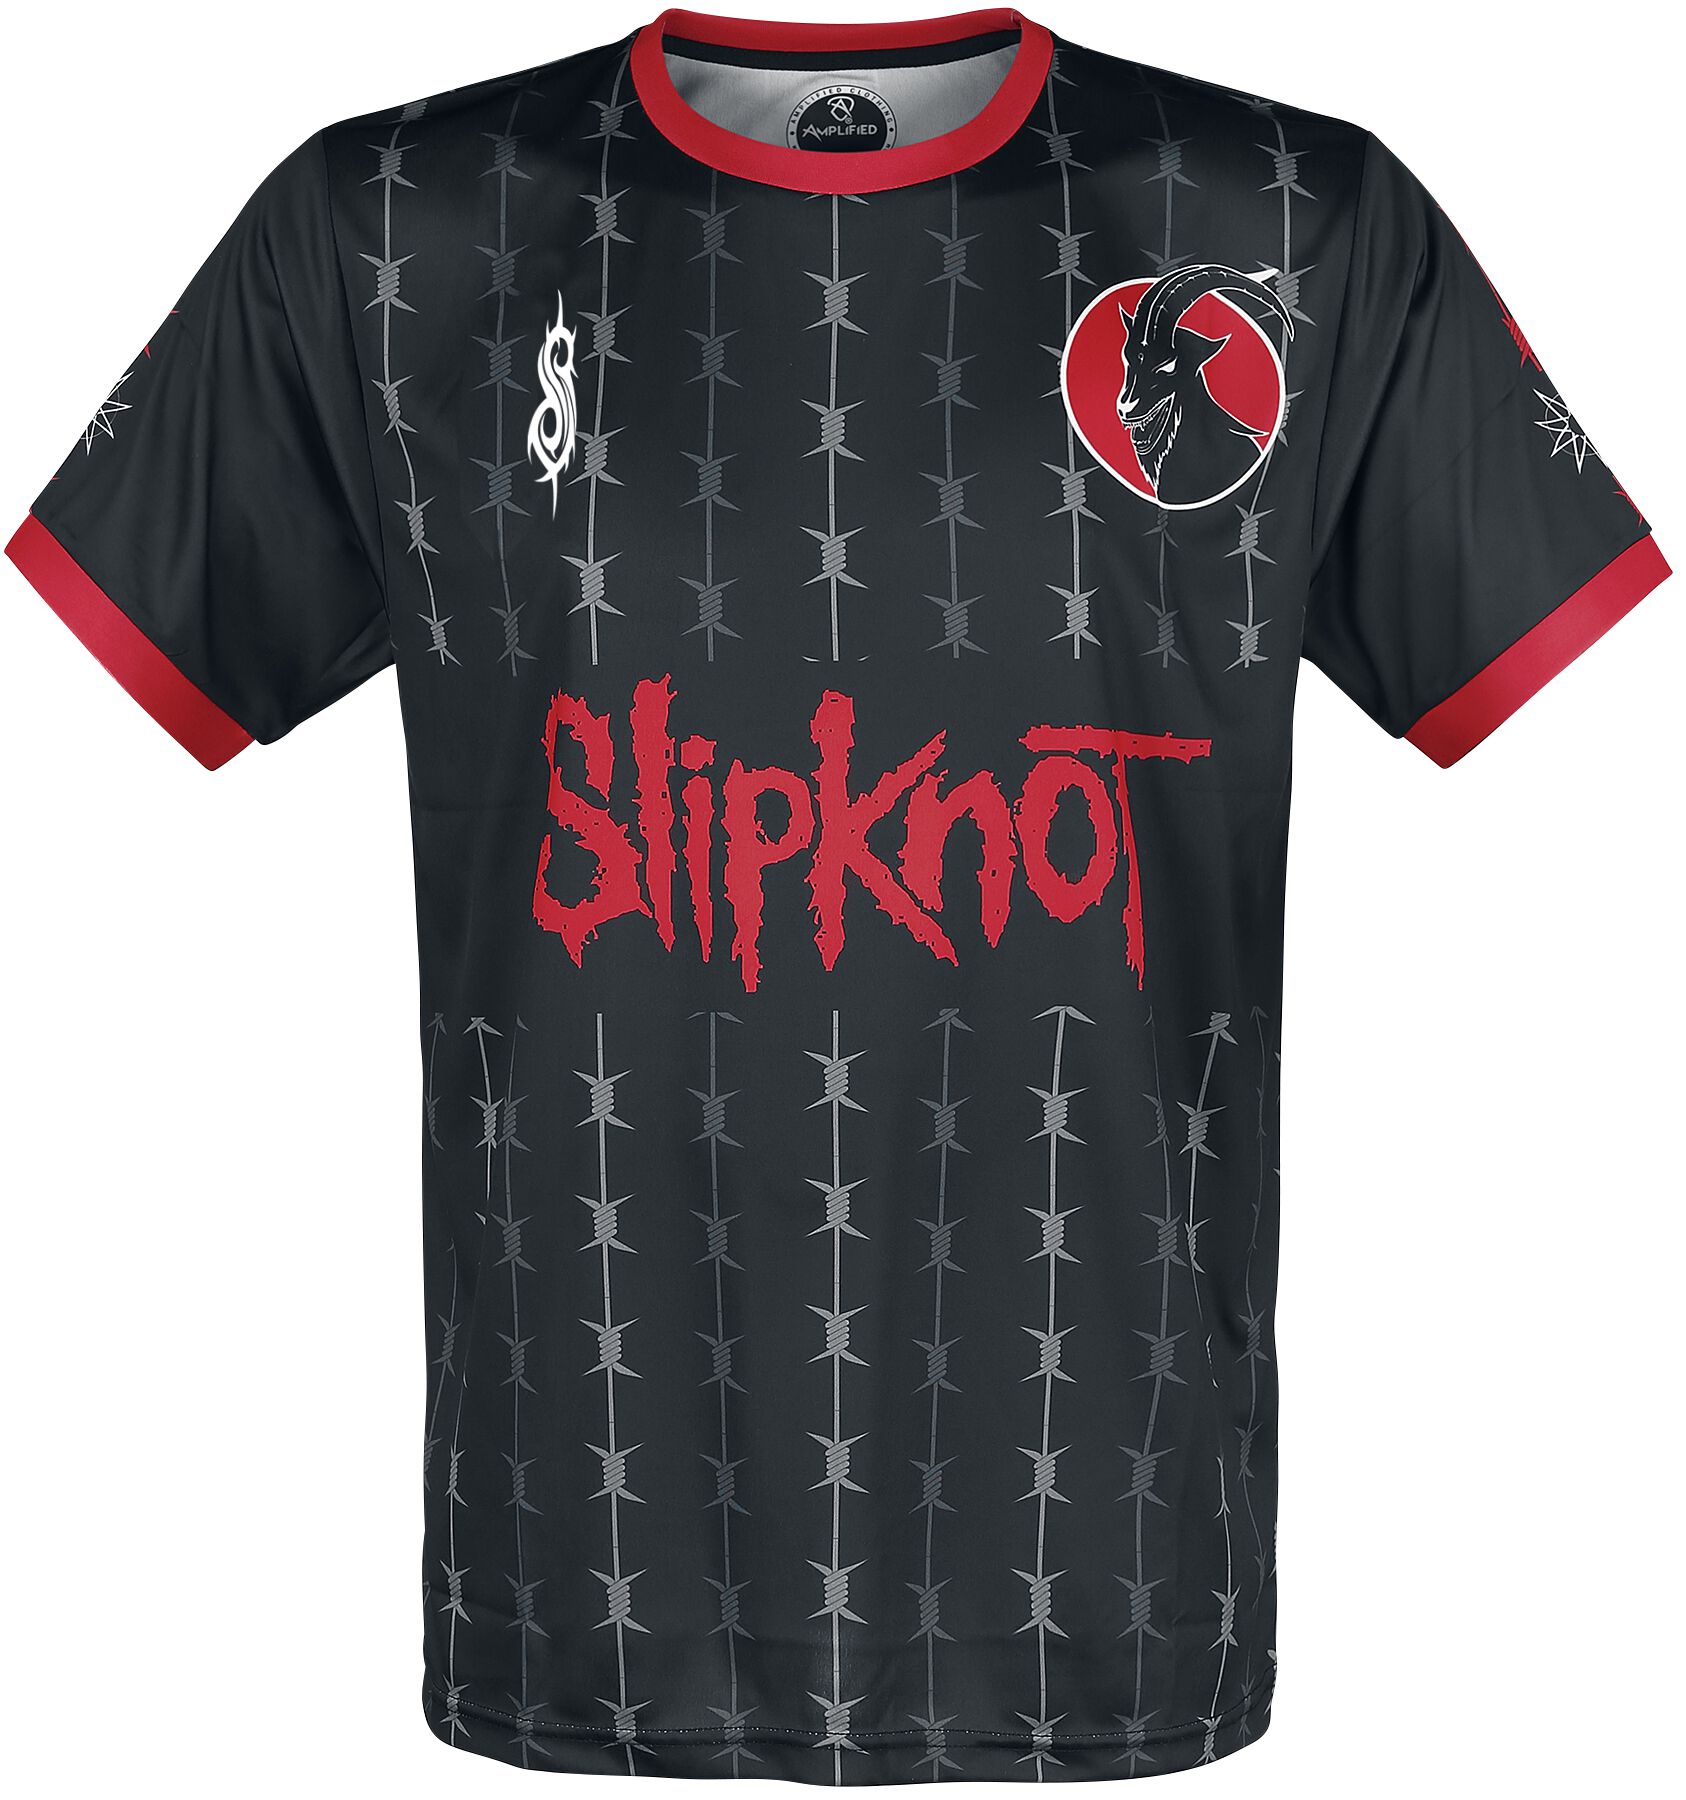 Slipknot Amplified Rock FC - Maggot - Trikot Jersey multicolour